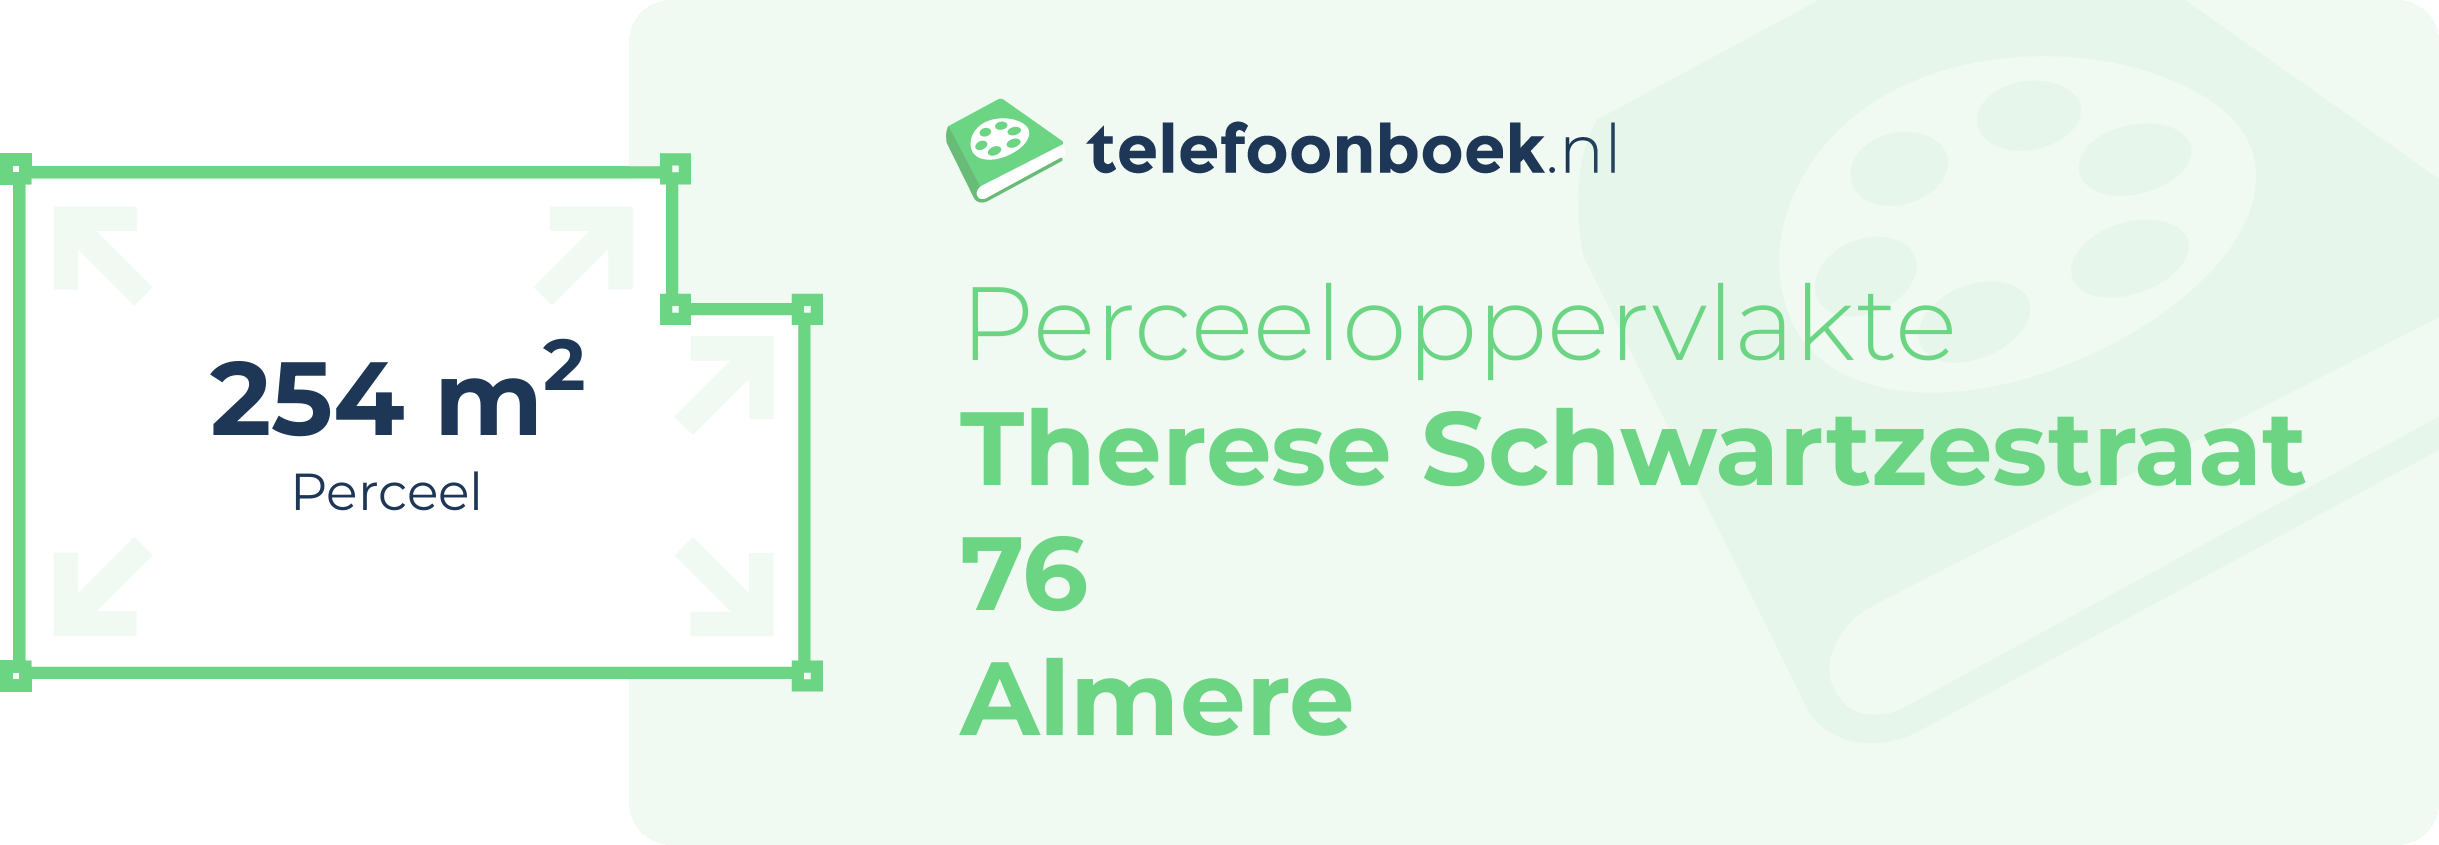 Perceeloppervlakte Therese Schwartzestraat 76 Almere